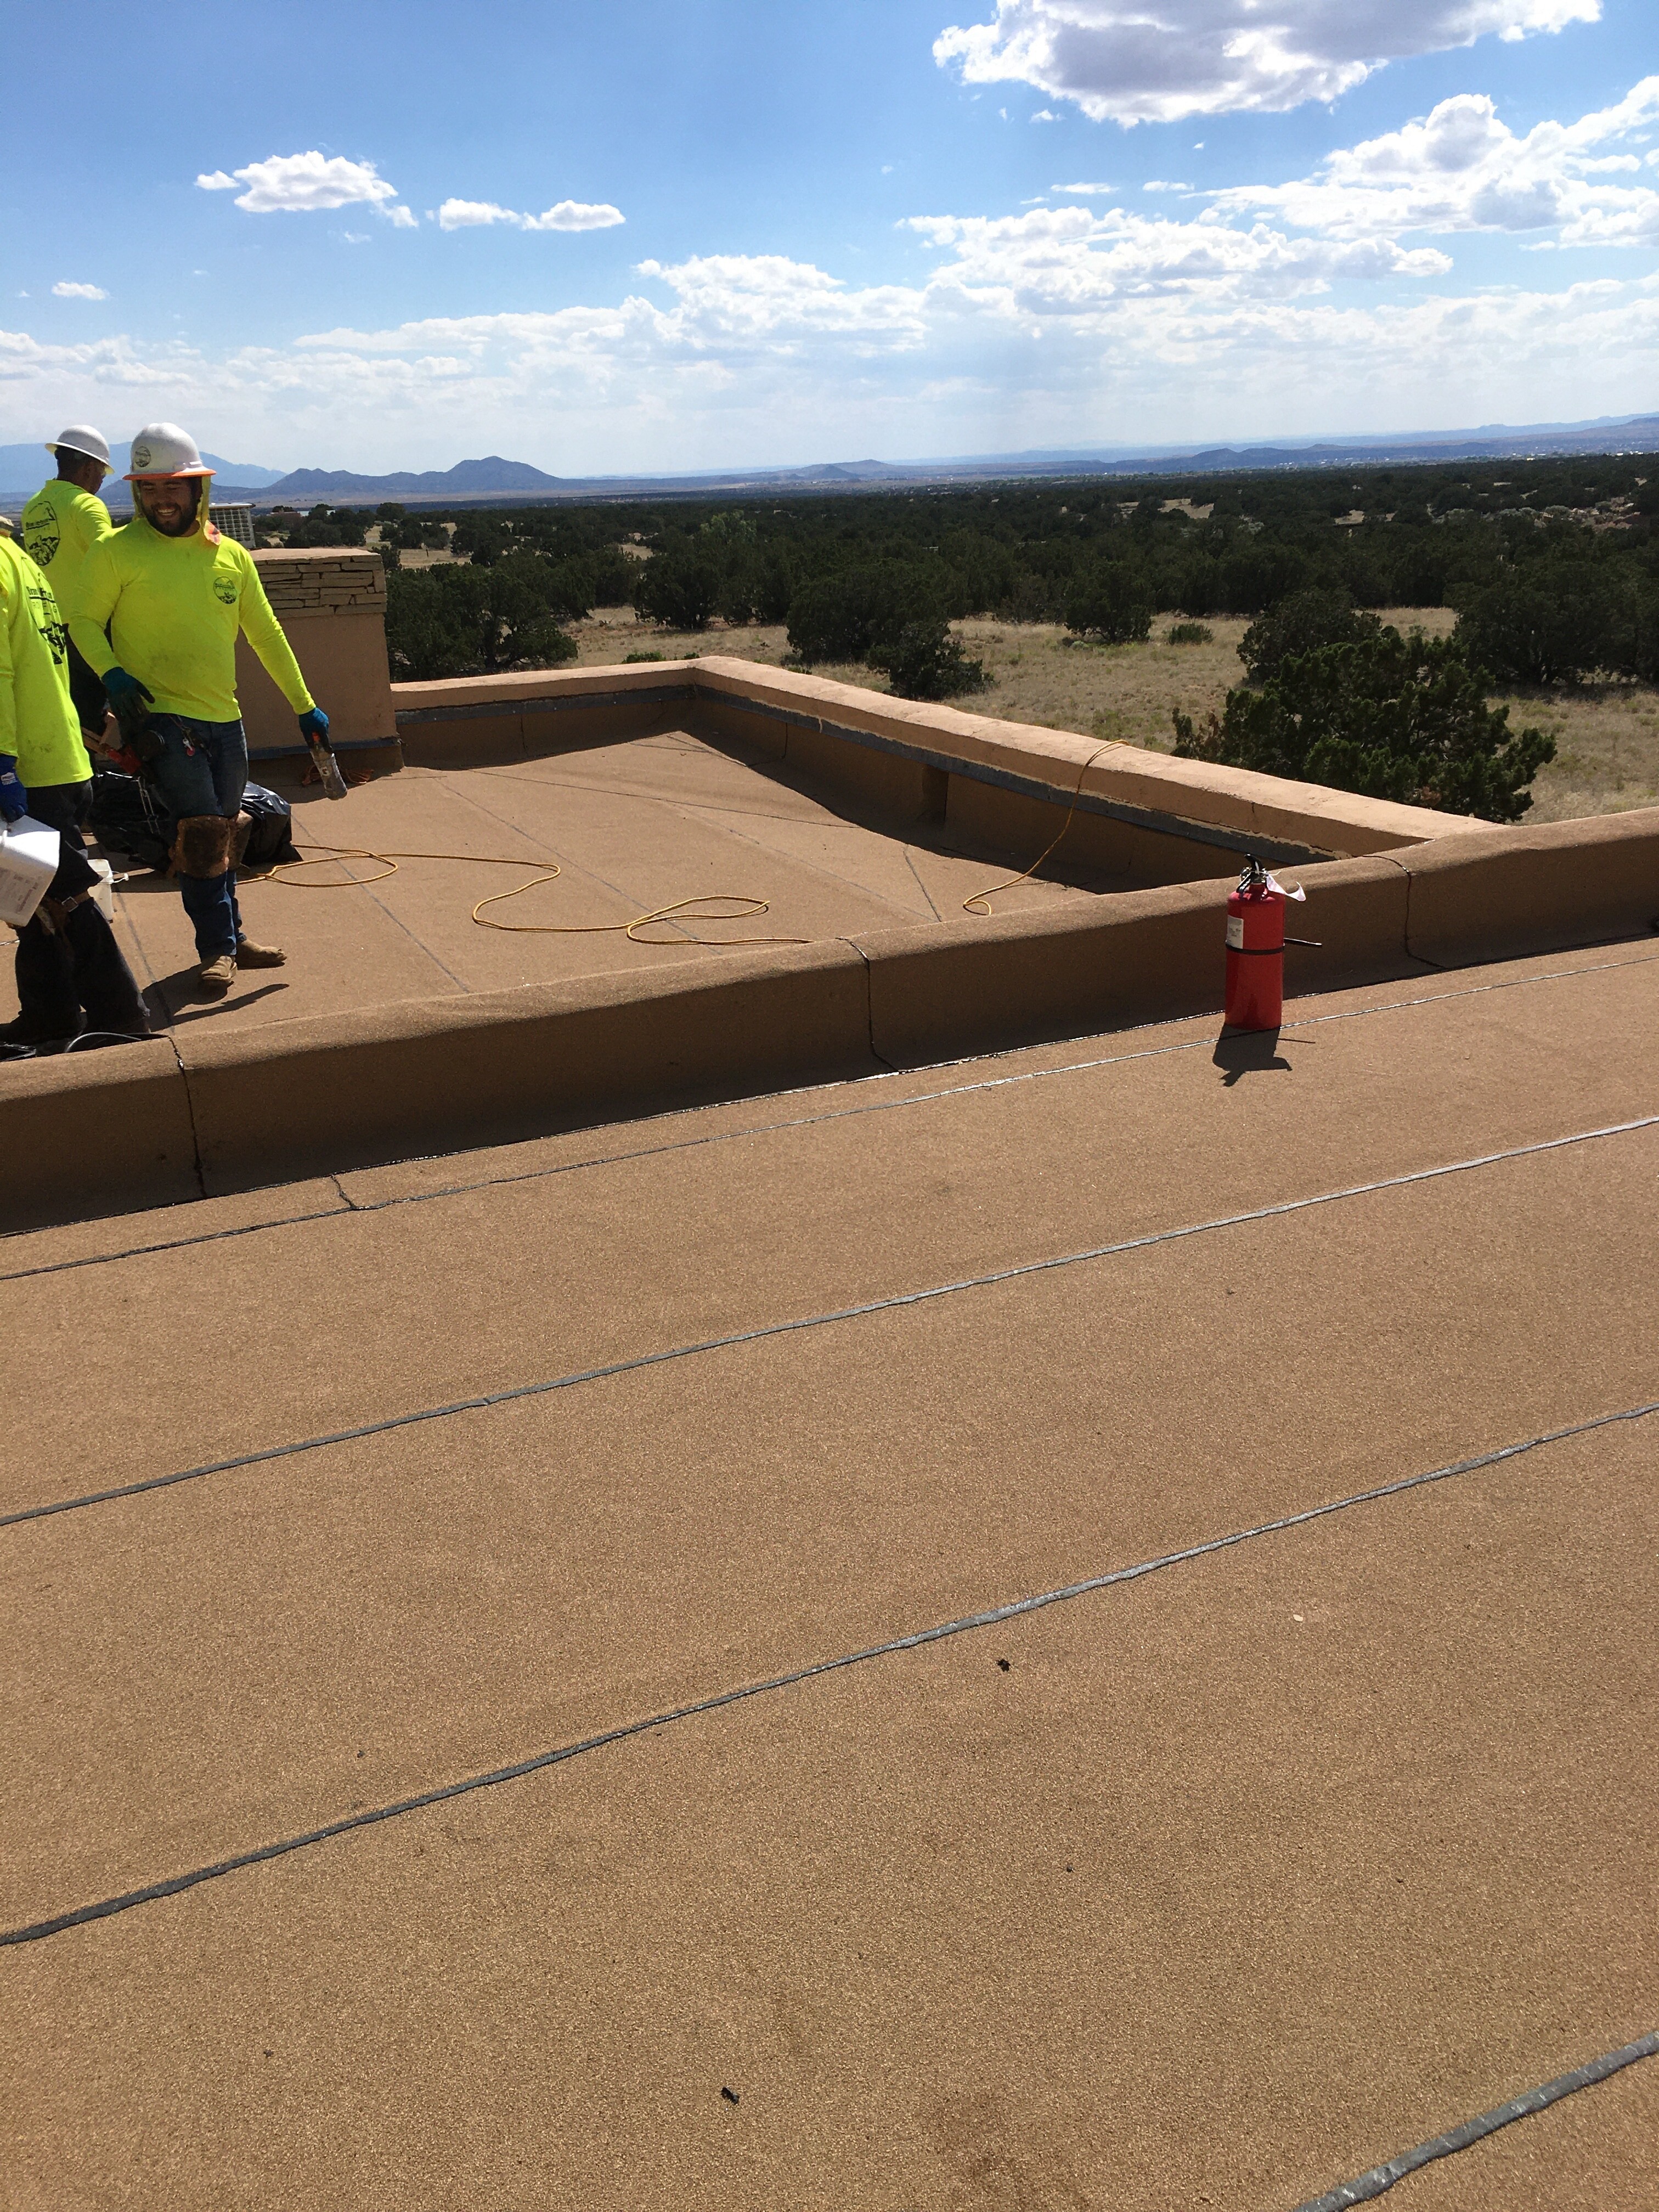 McParlton Roofing of Santa Fe, New Mexico